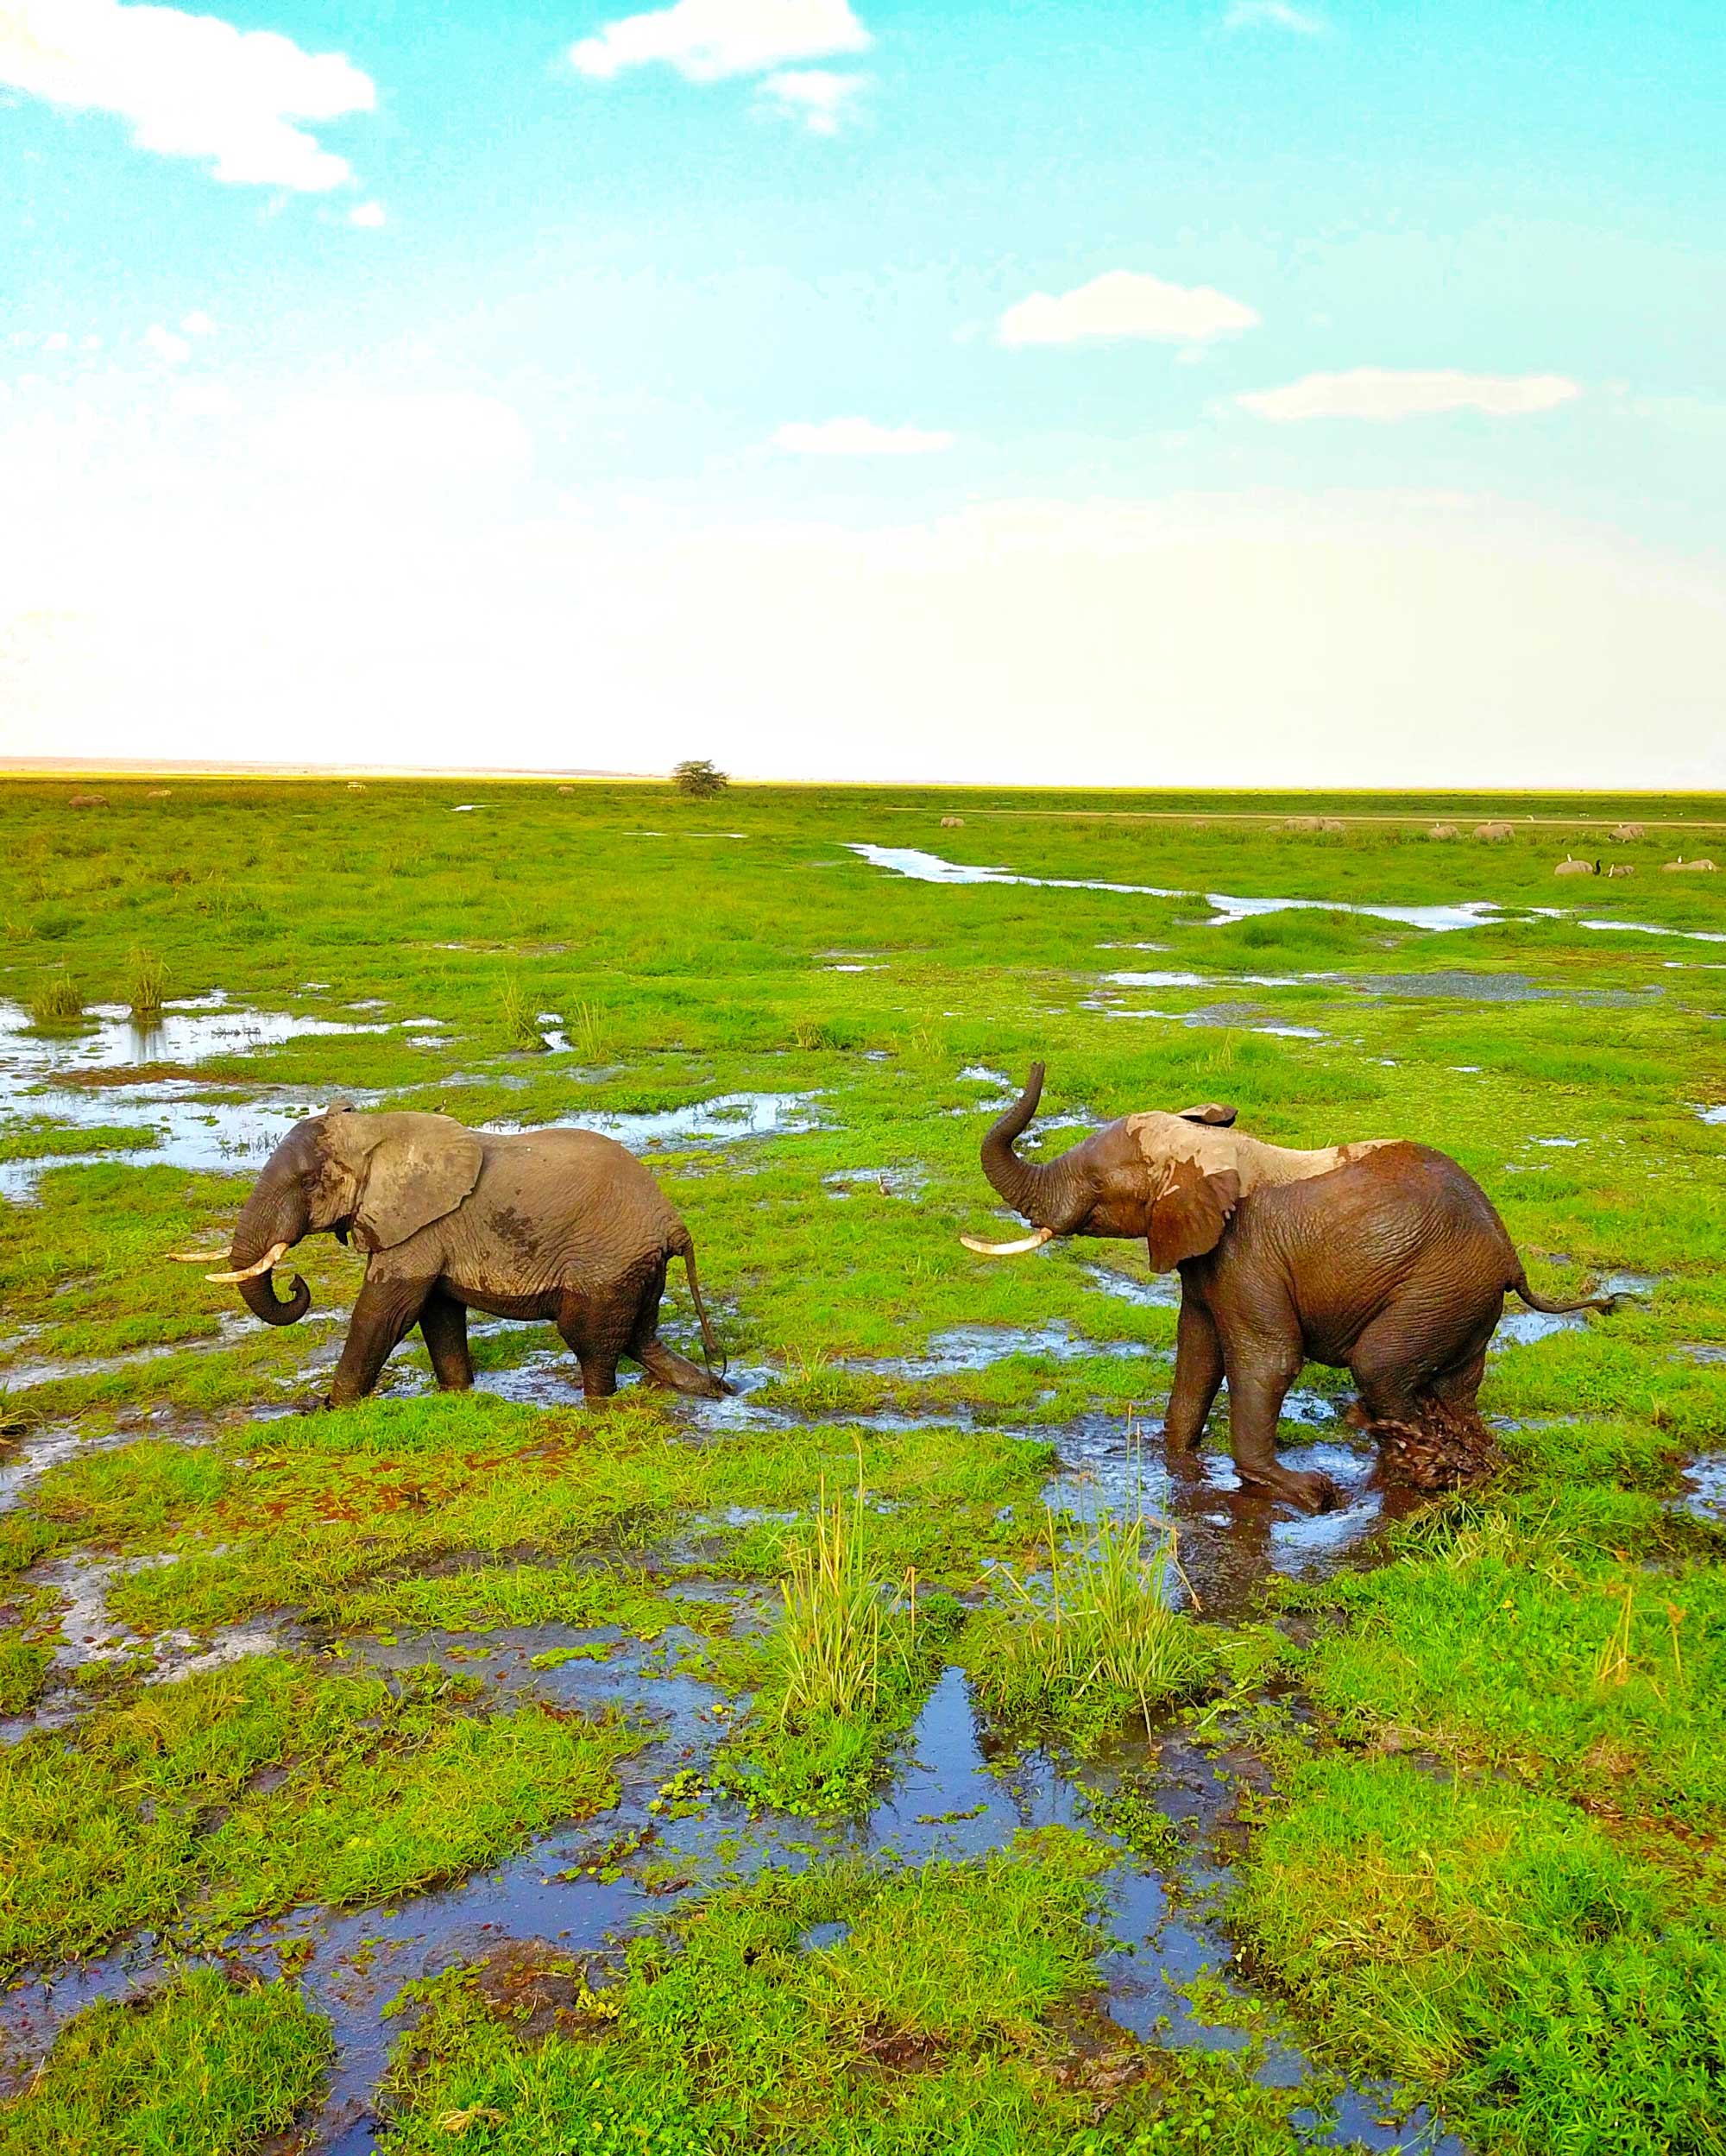 two elephants walking through a wet grassy area